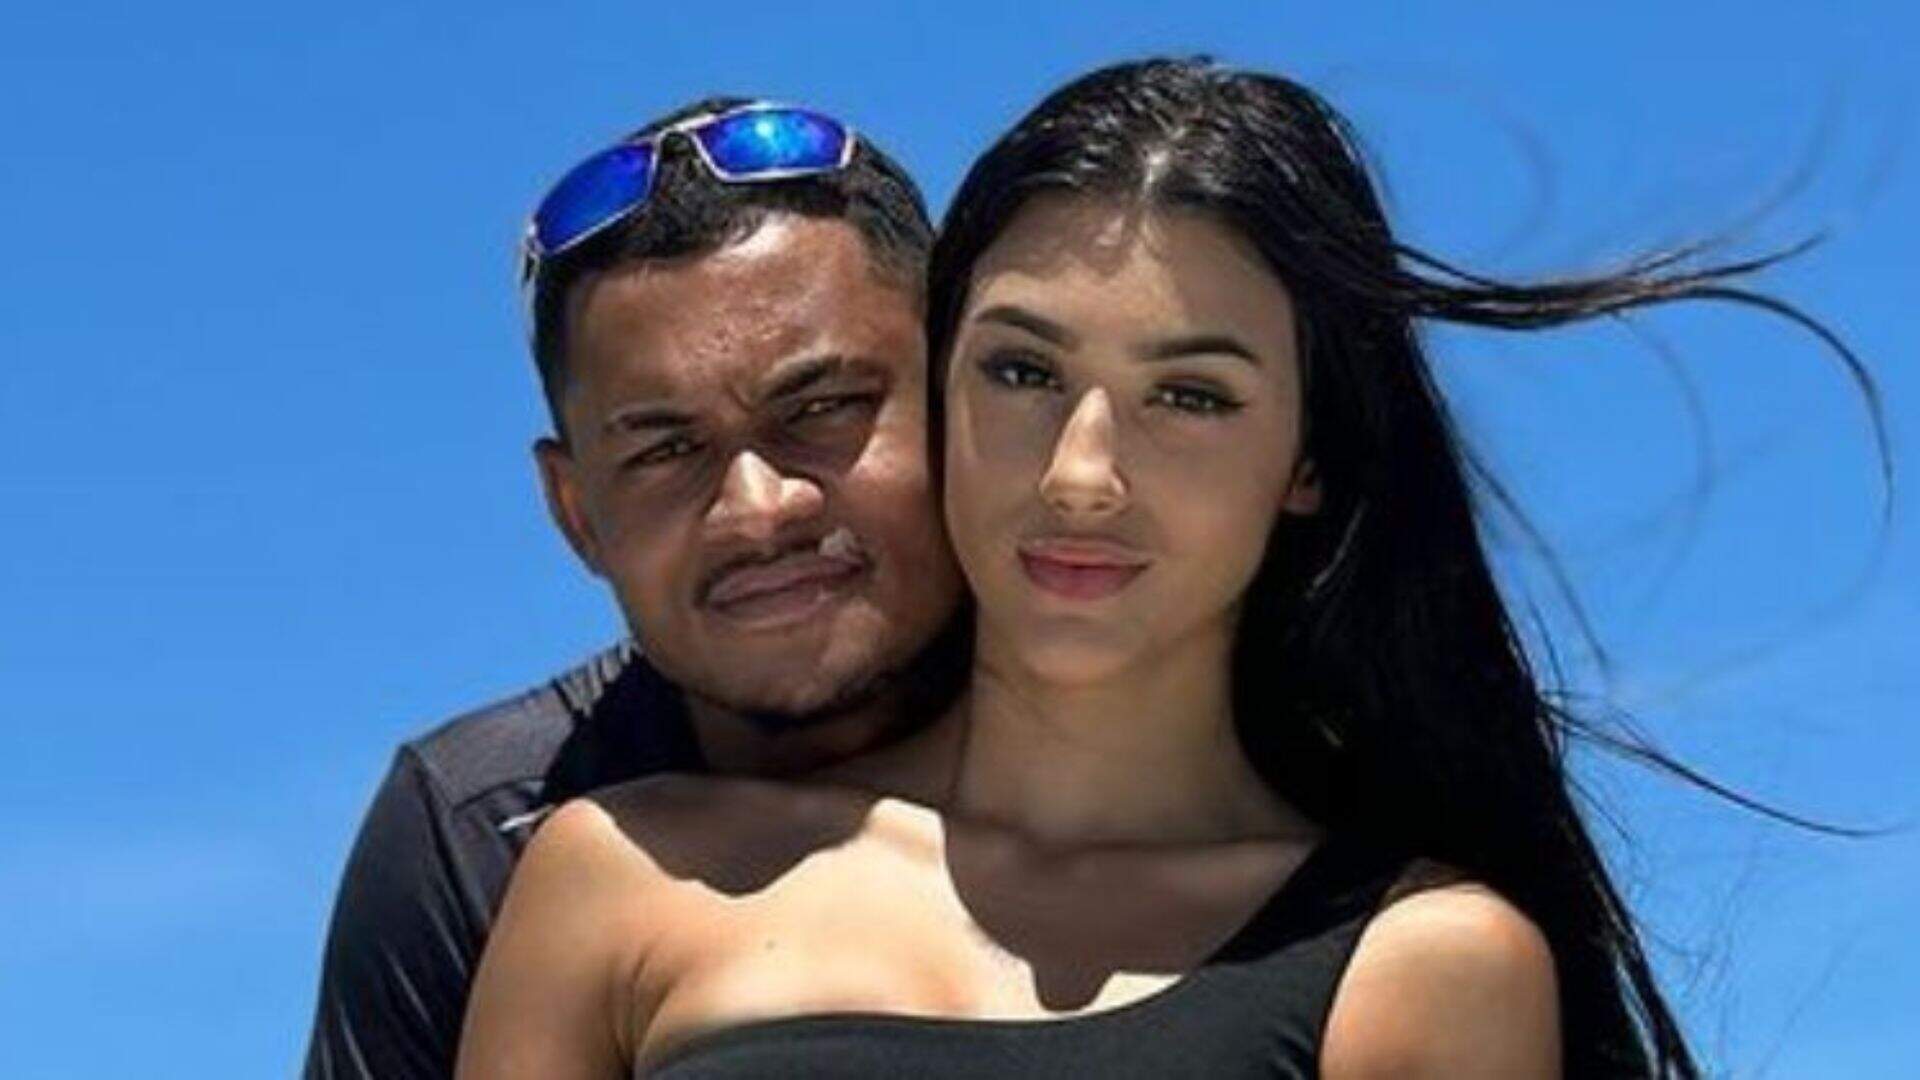 Bia Miranda revela mentiras de ex-noivo: “Sair como santo” - Metropolitana FM